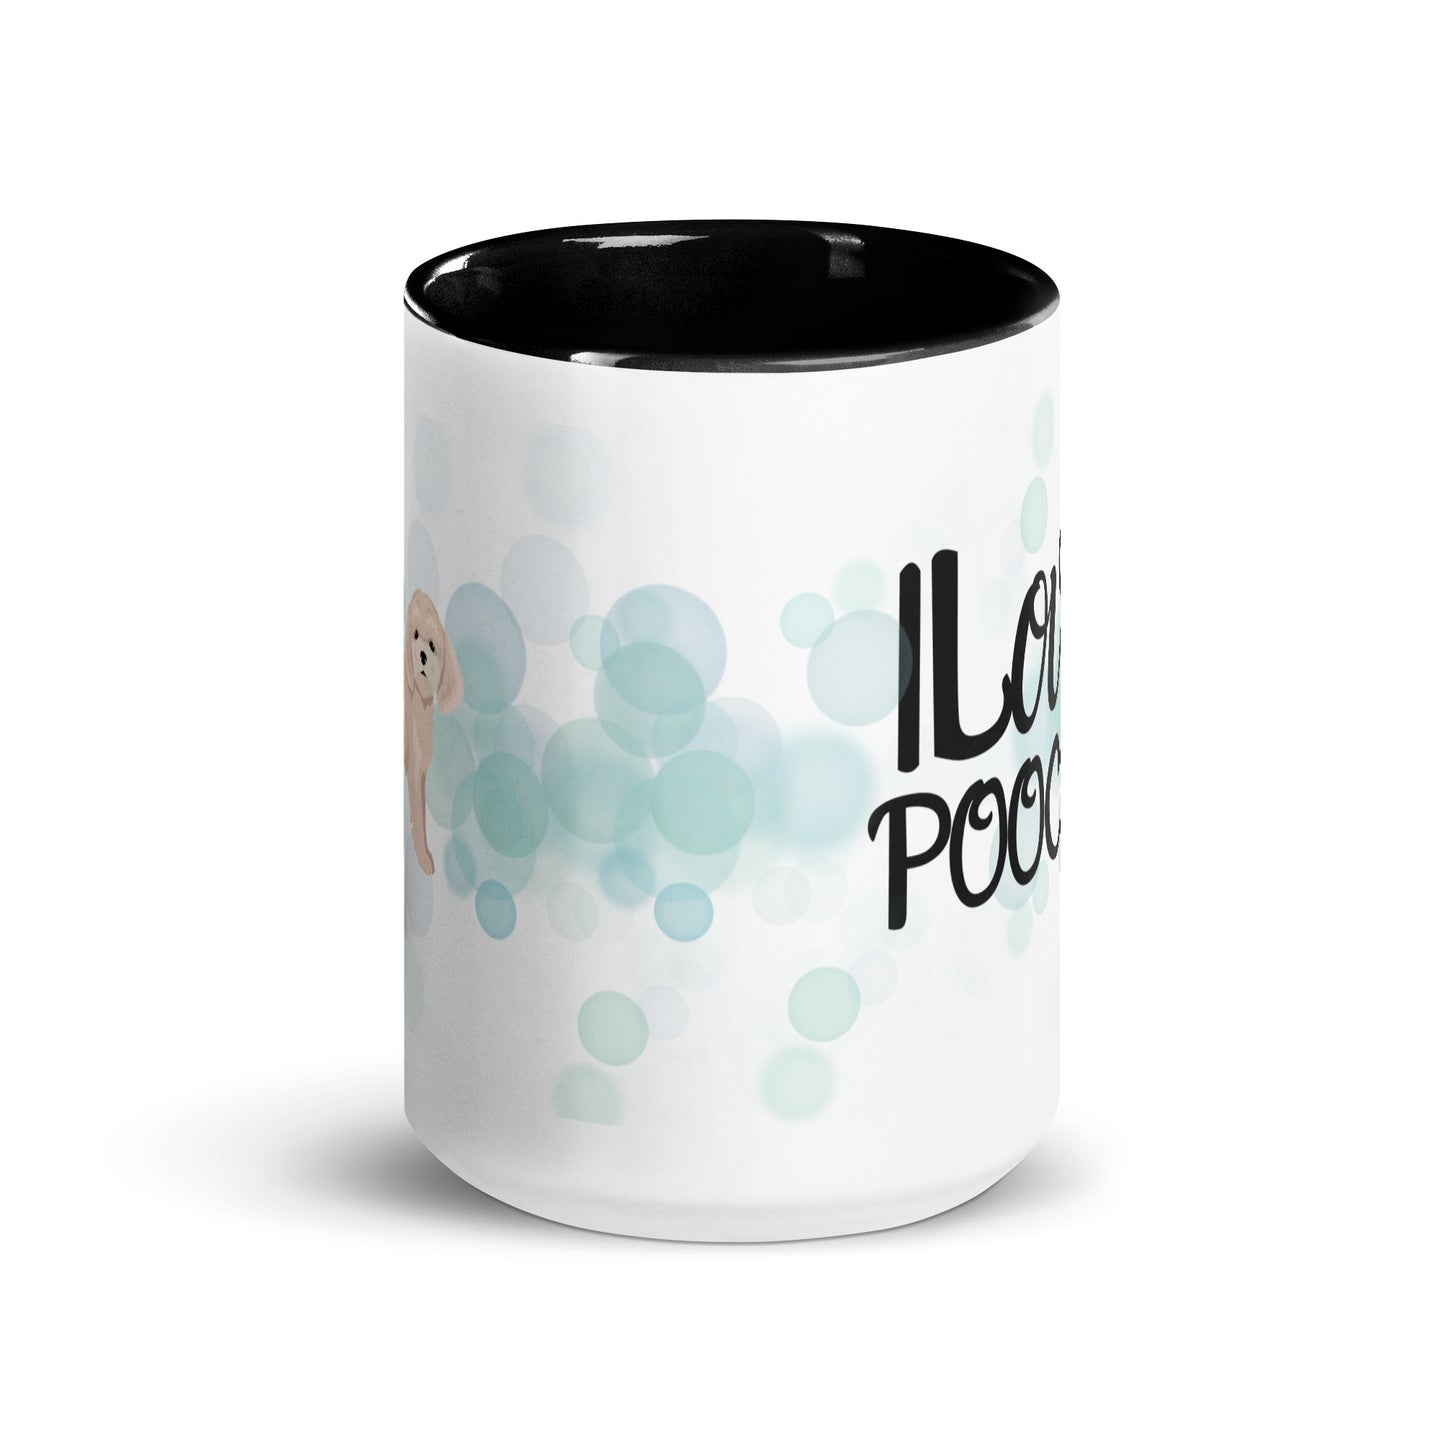 "I Love my..." mug with black inside - white / light Poochon